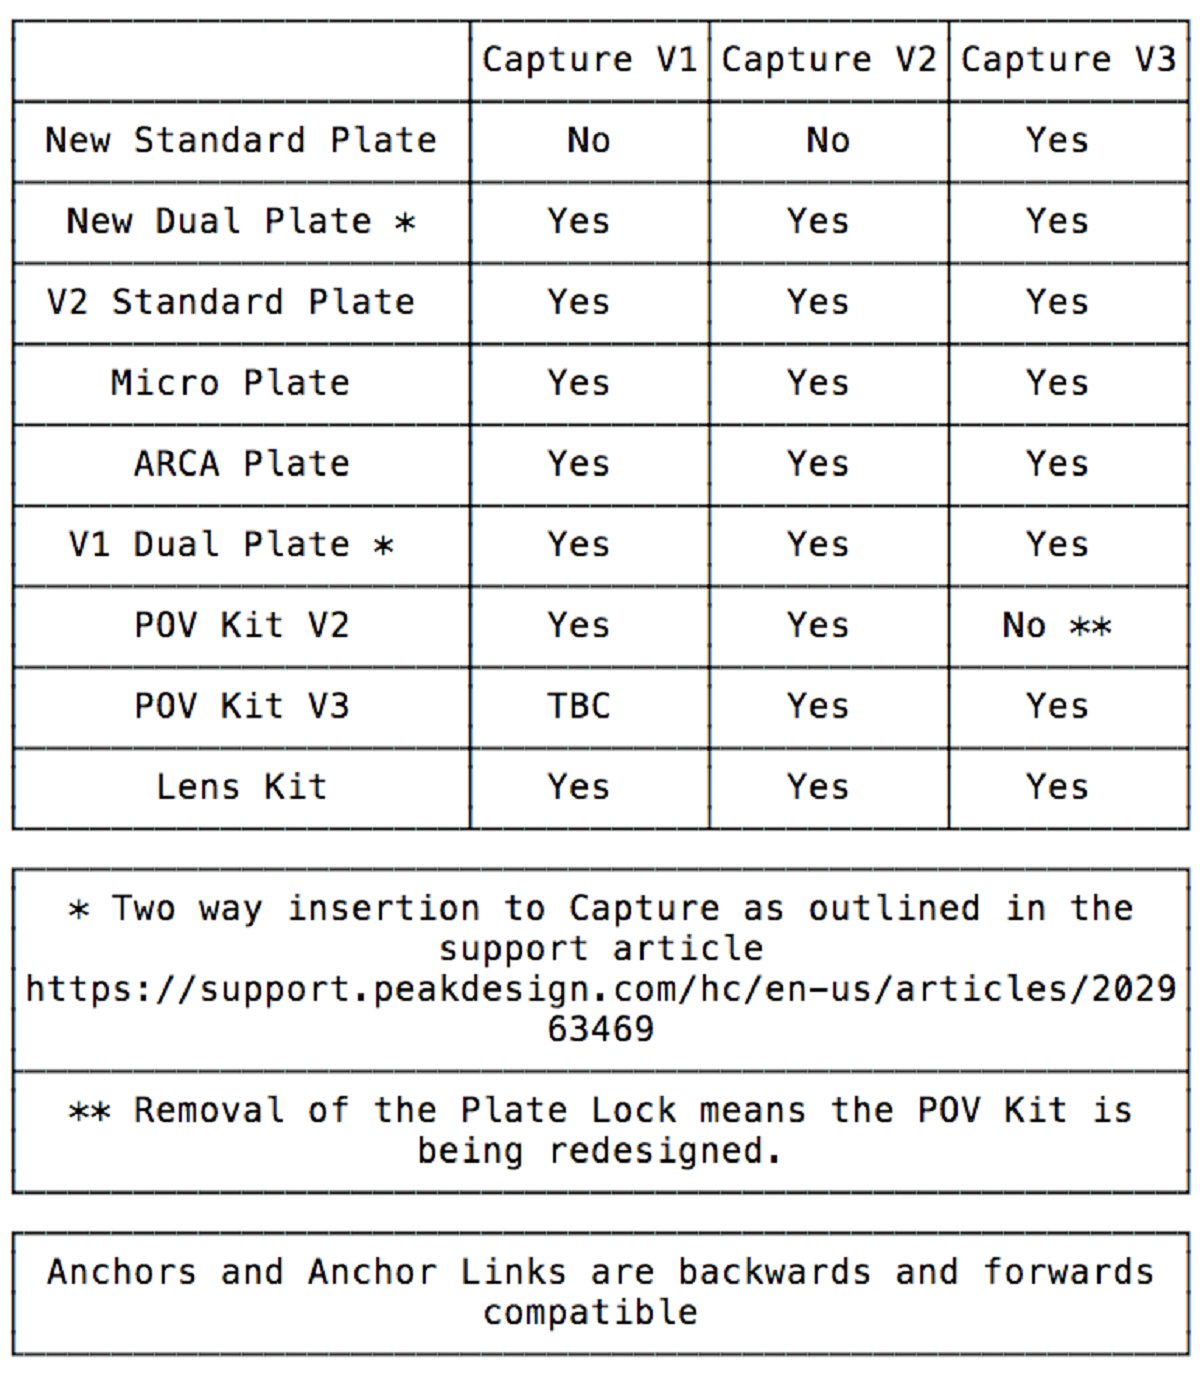 Peak Design Capture V3 - Compatibility table...